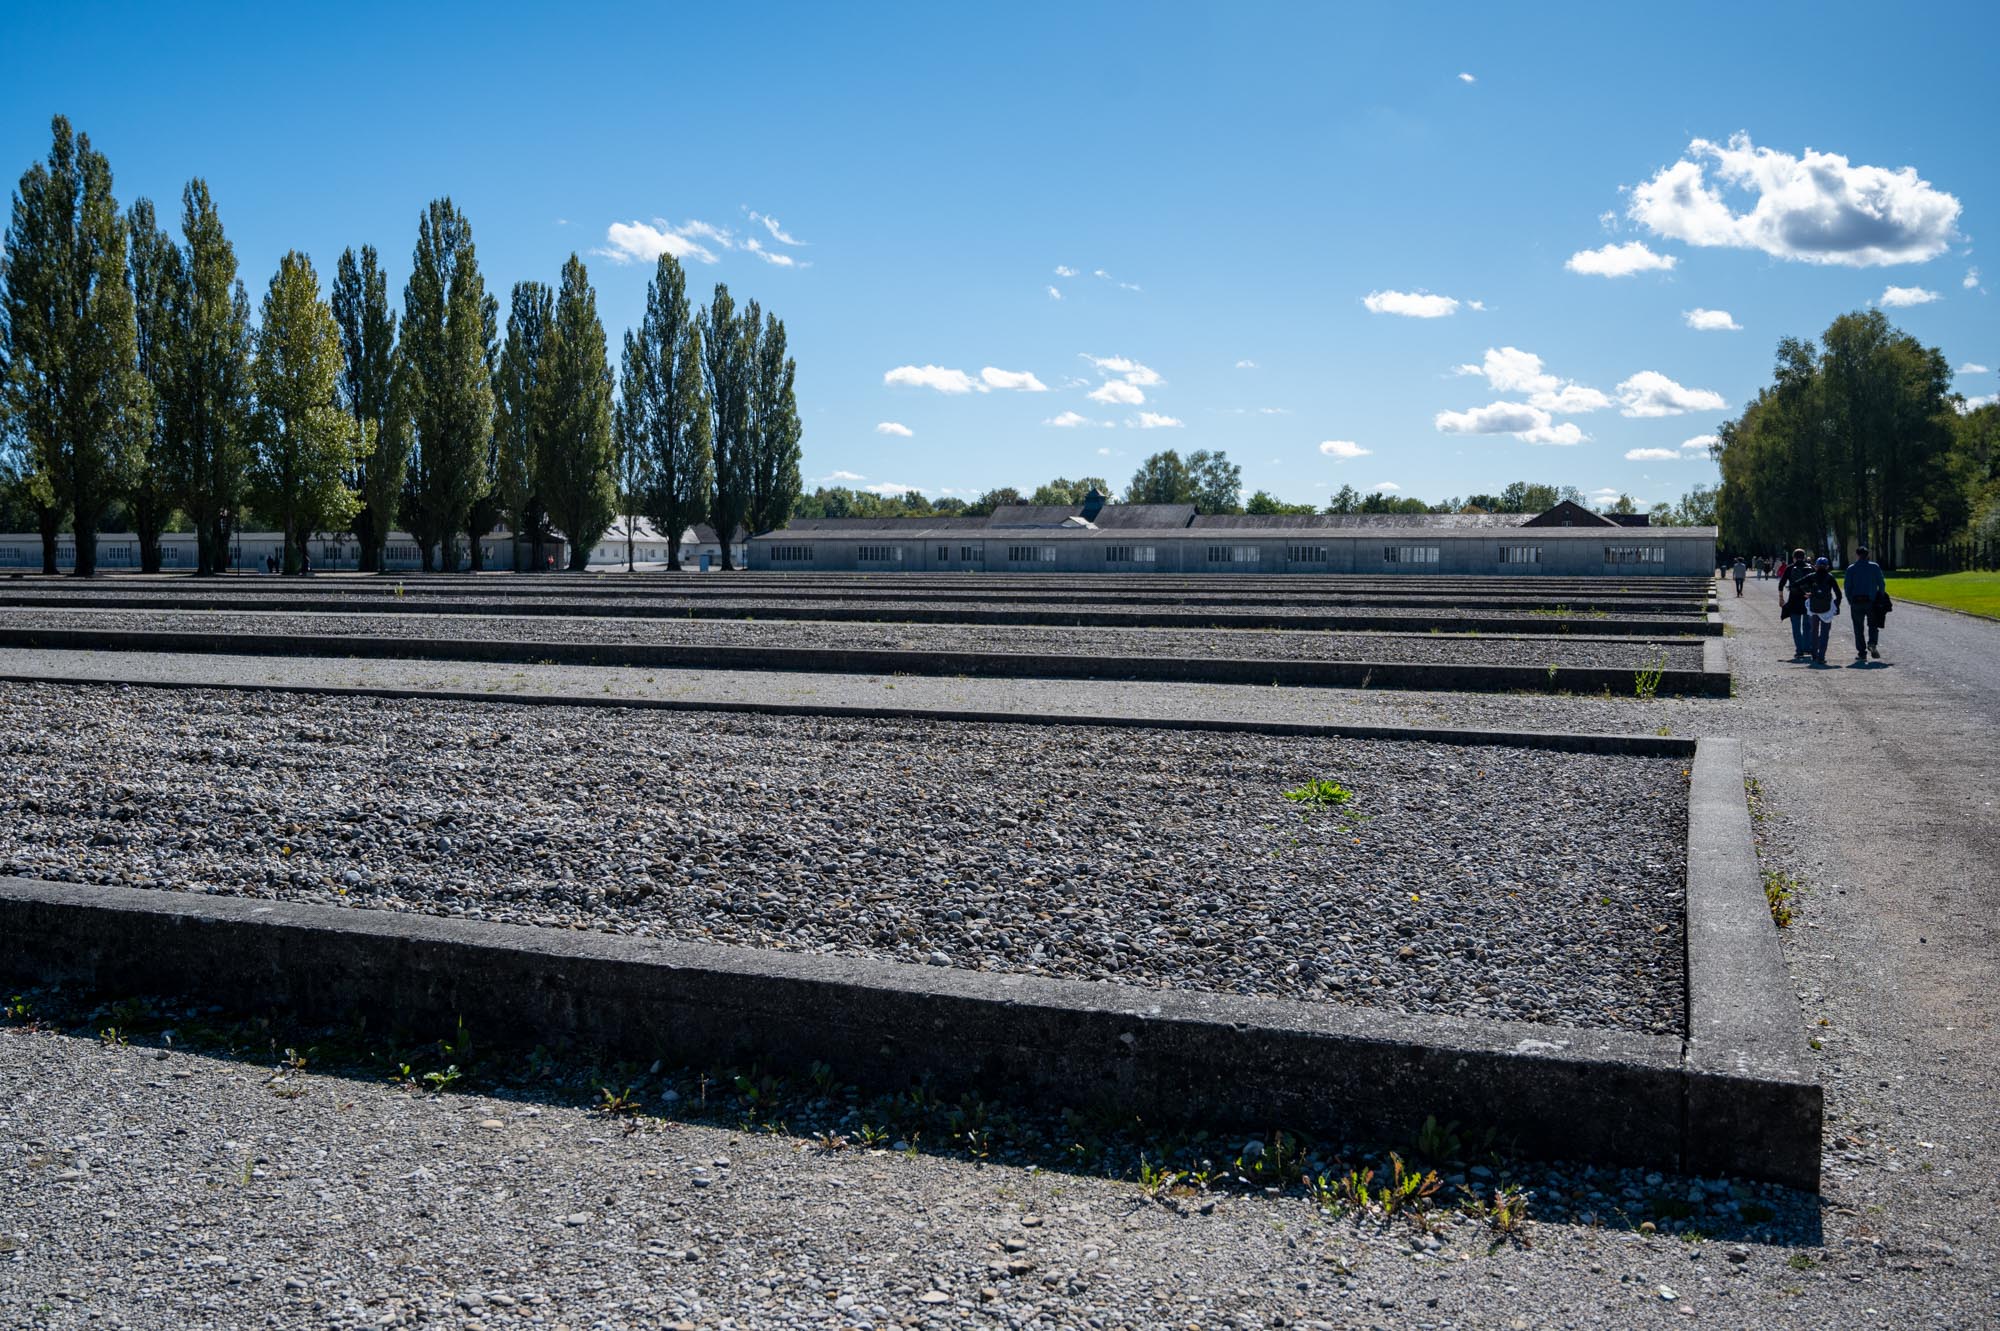 The rectangles mark where the barracks once stood in Dachau